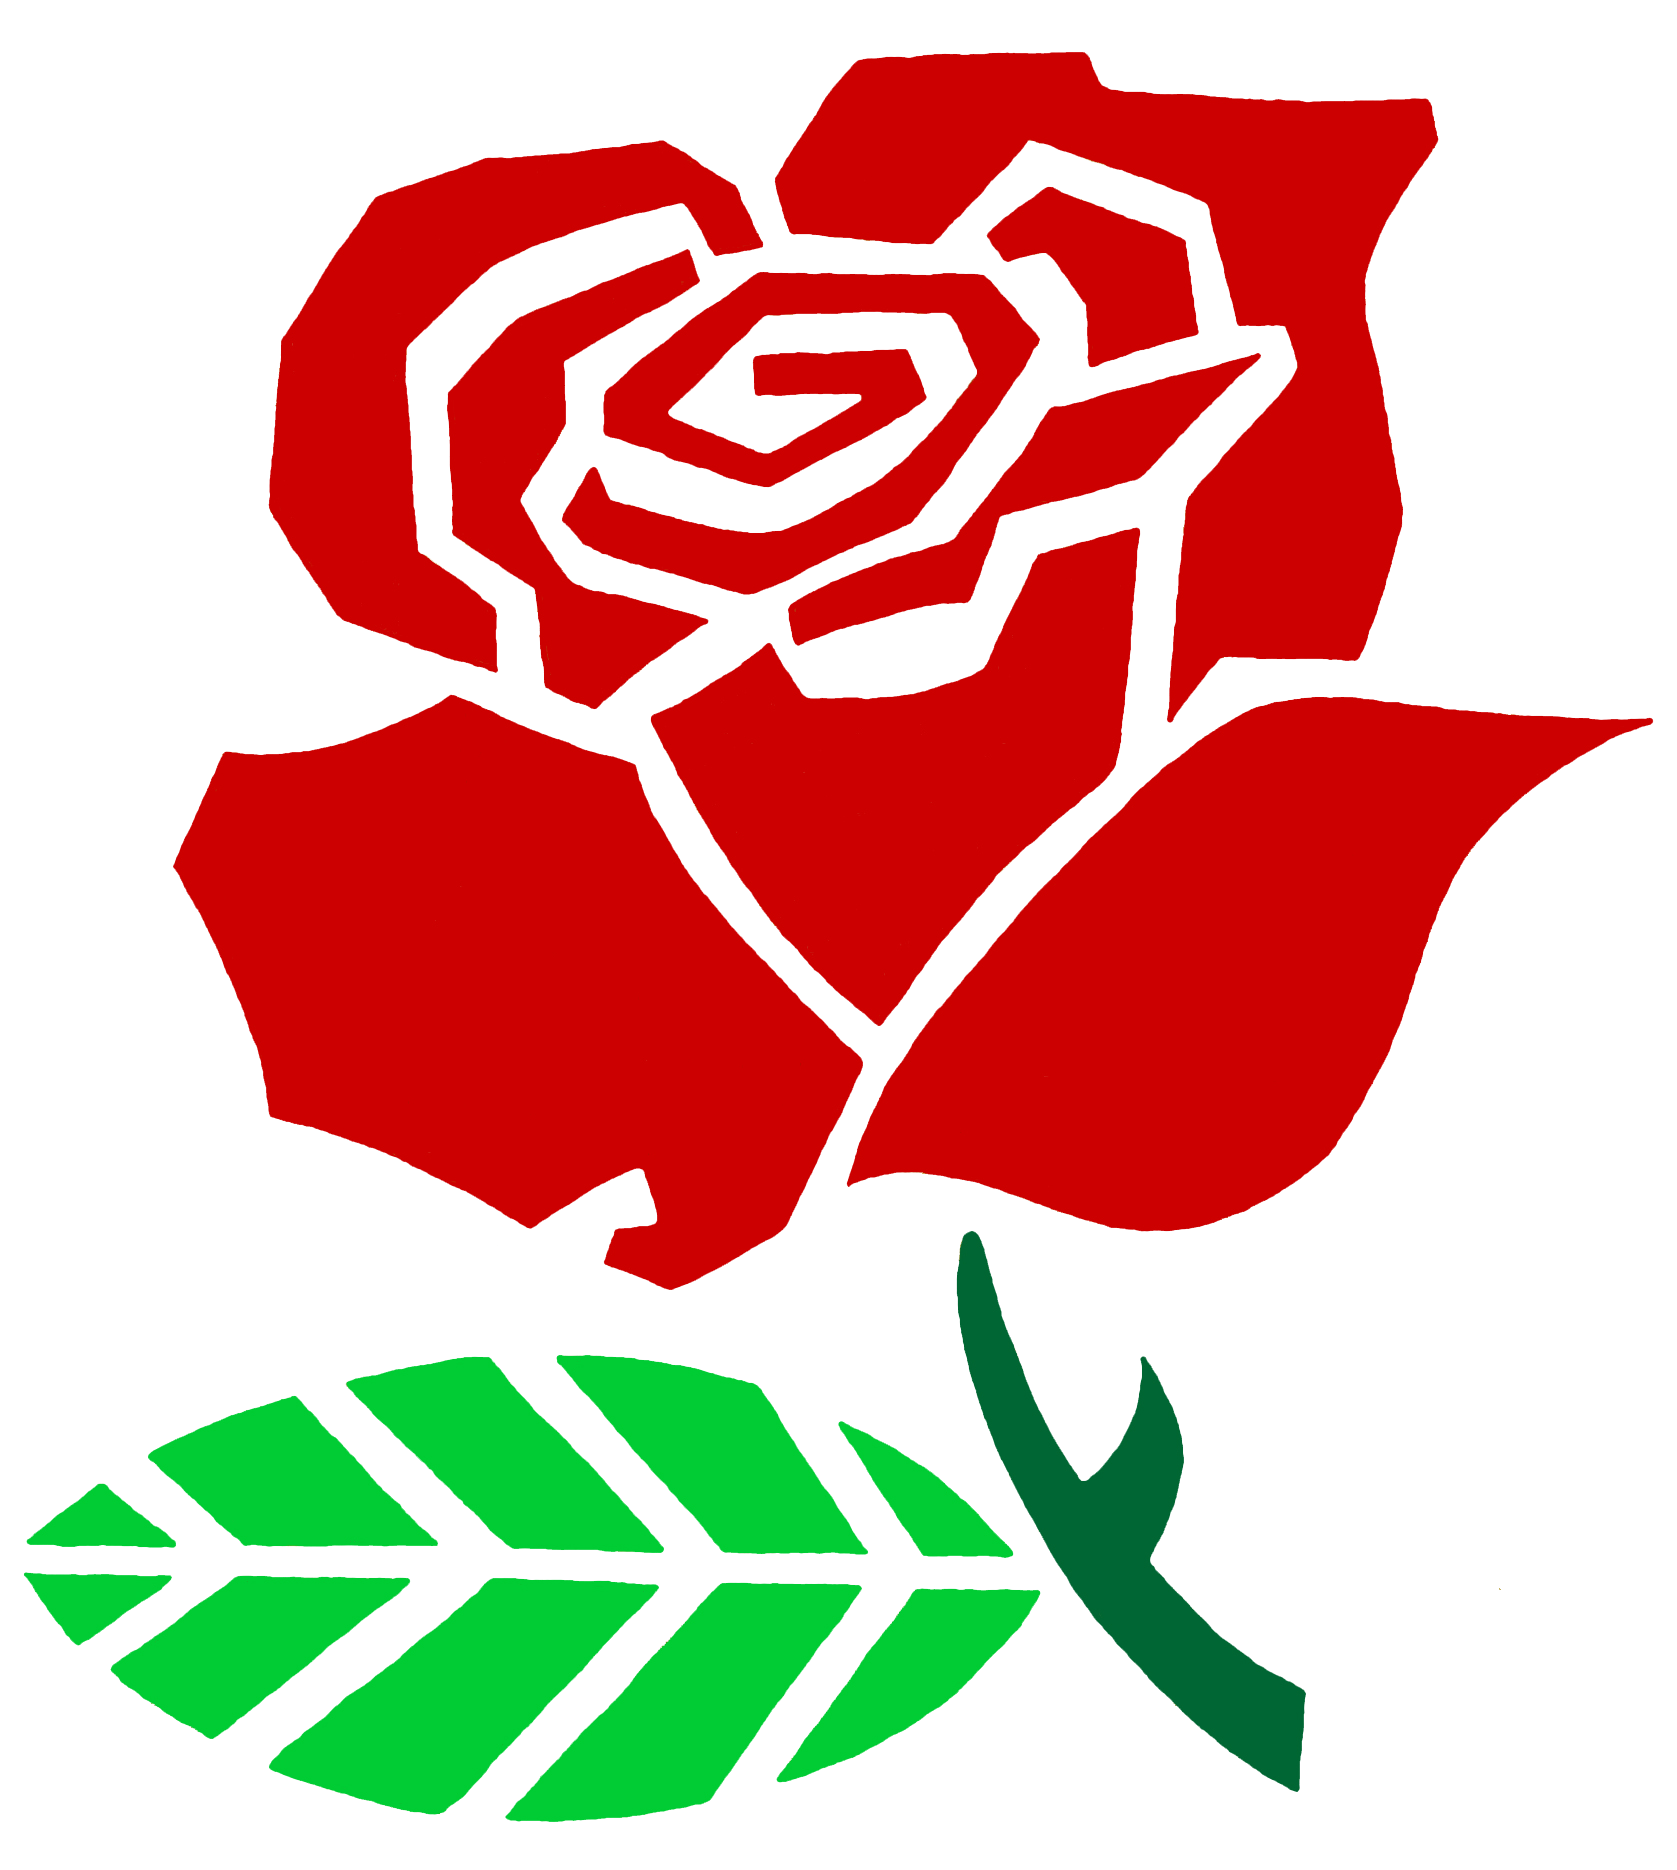 (c) Rosen-zundel.de